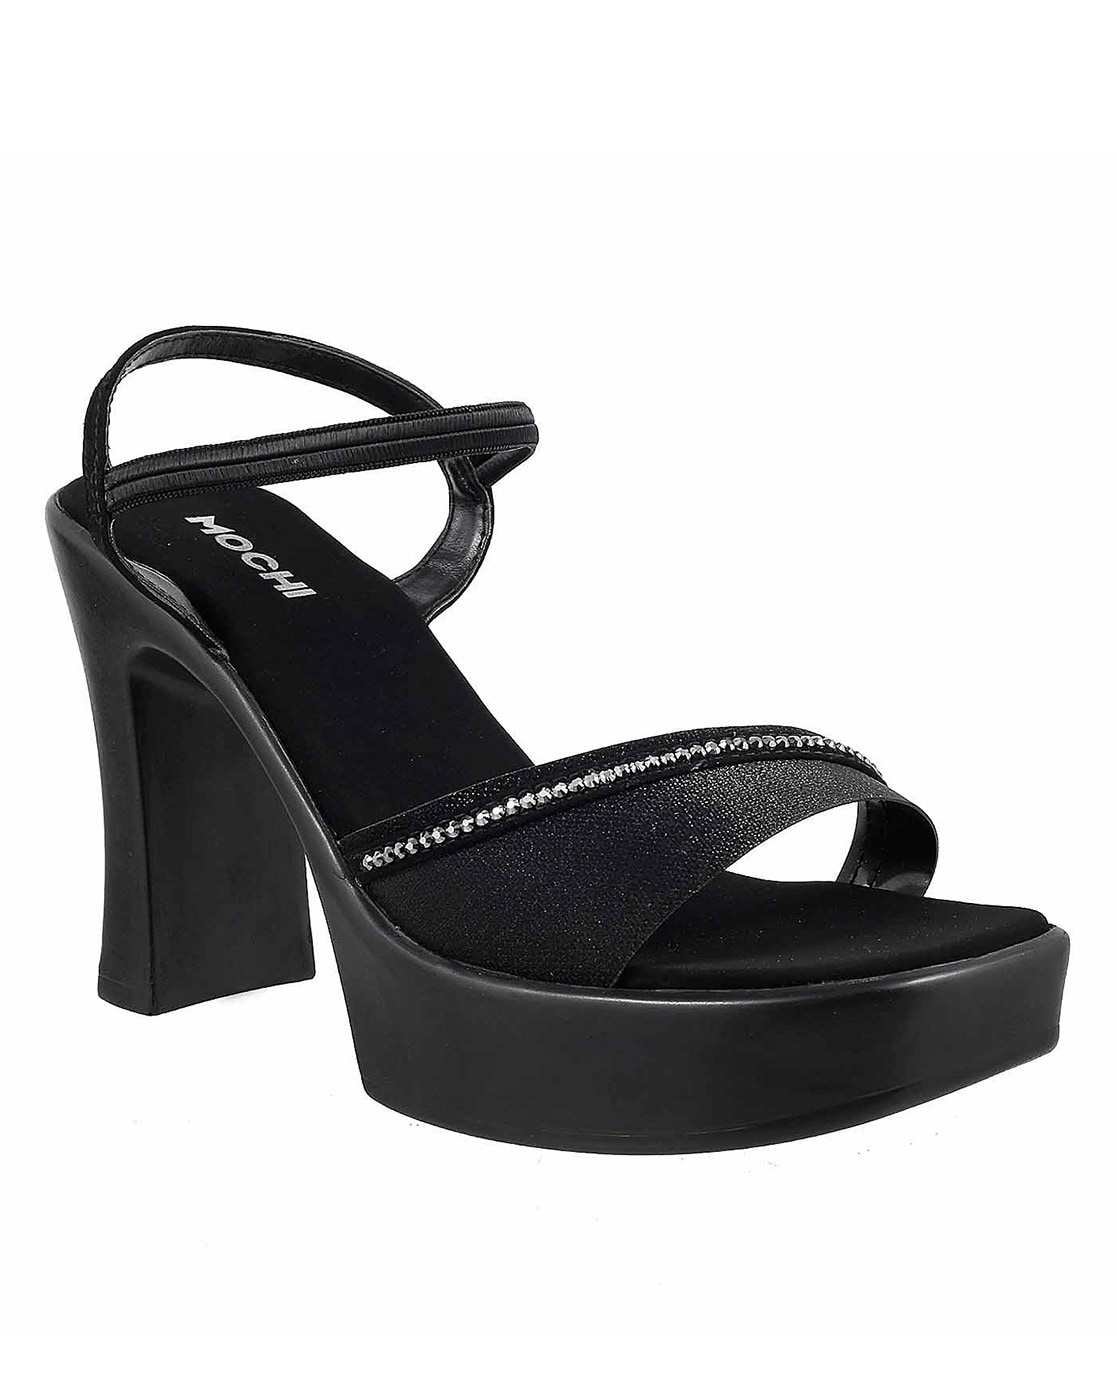 Buy Black Heeled Sandals for Women Online in India - Westside